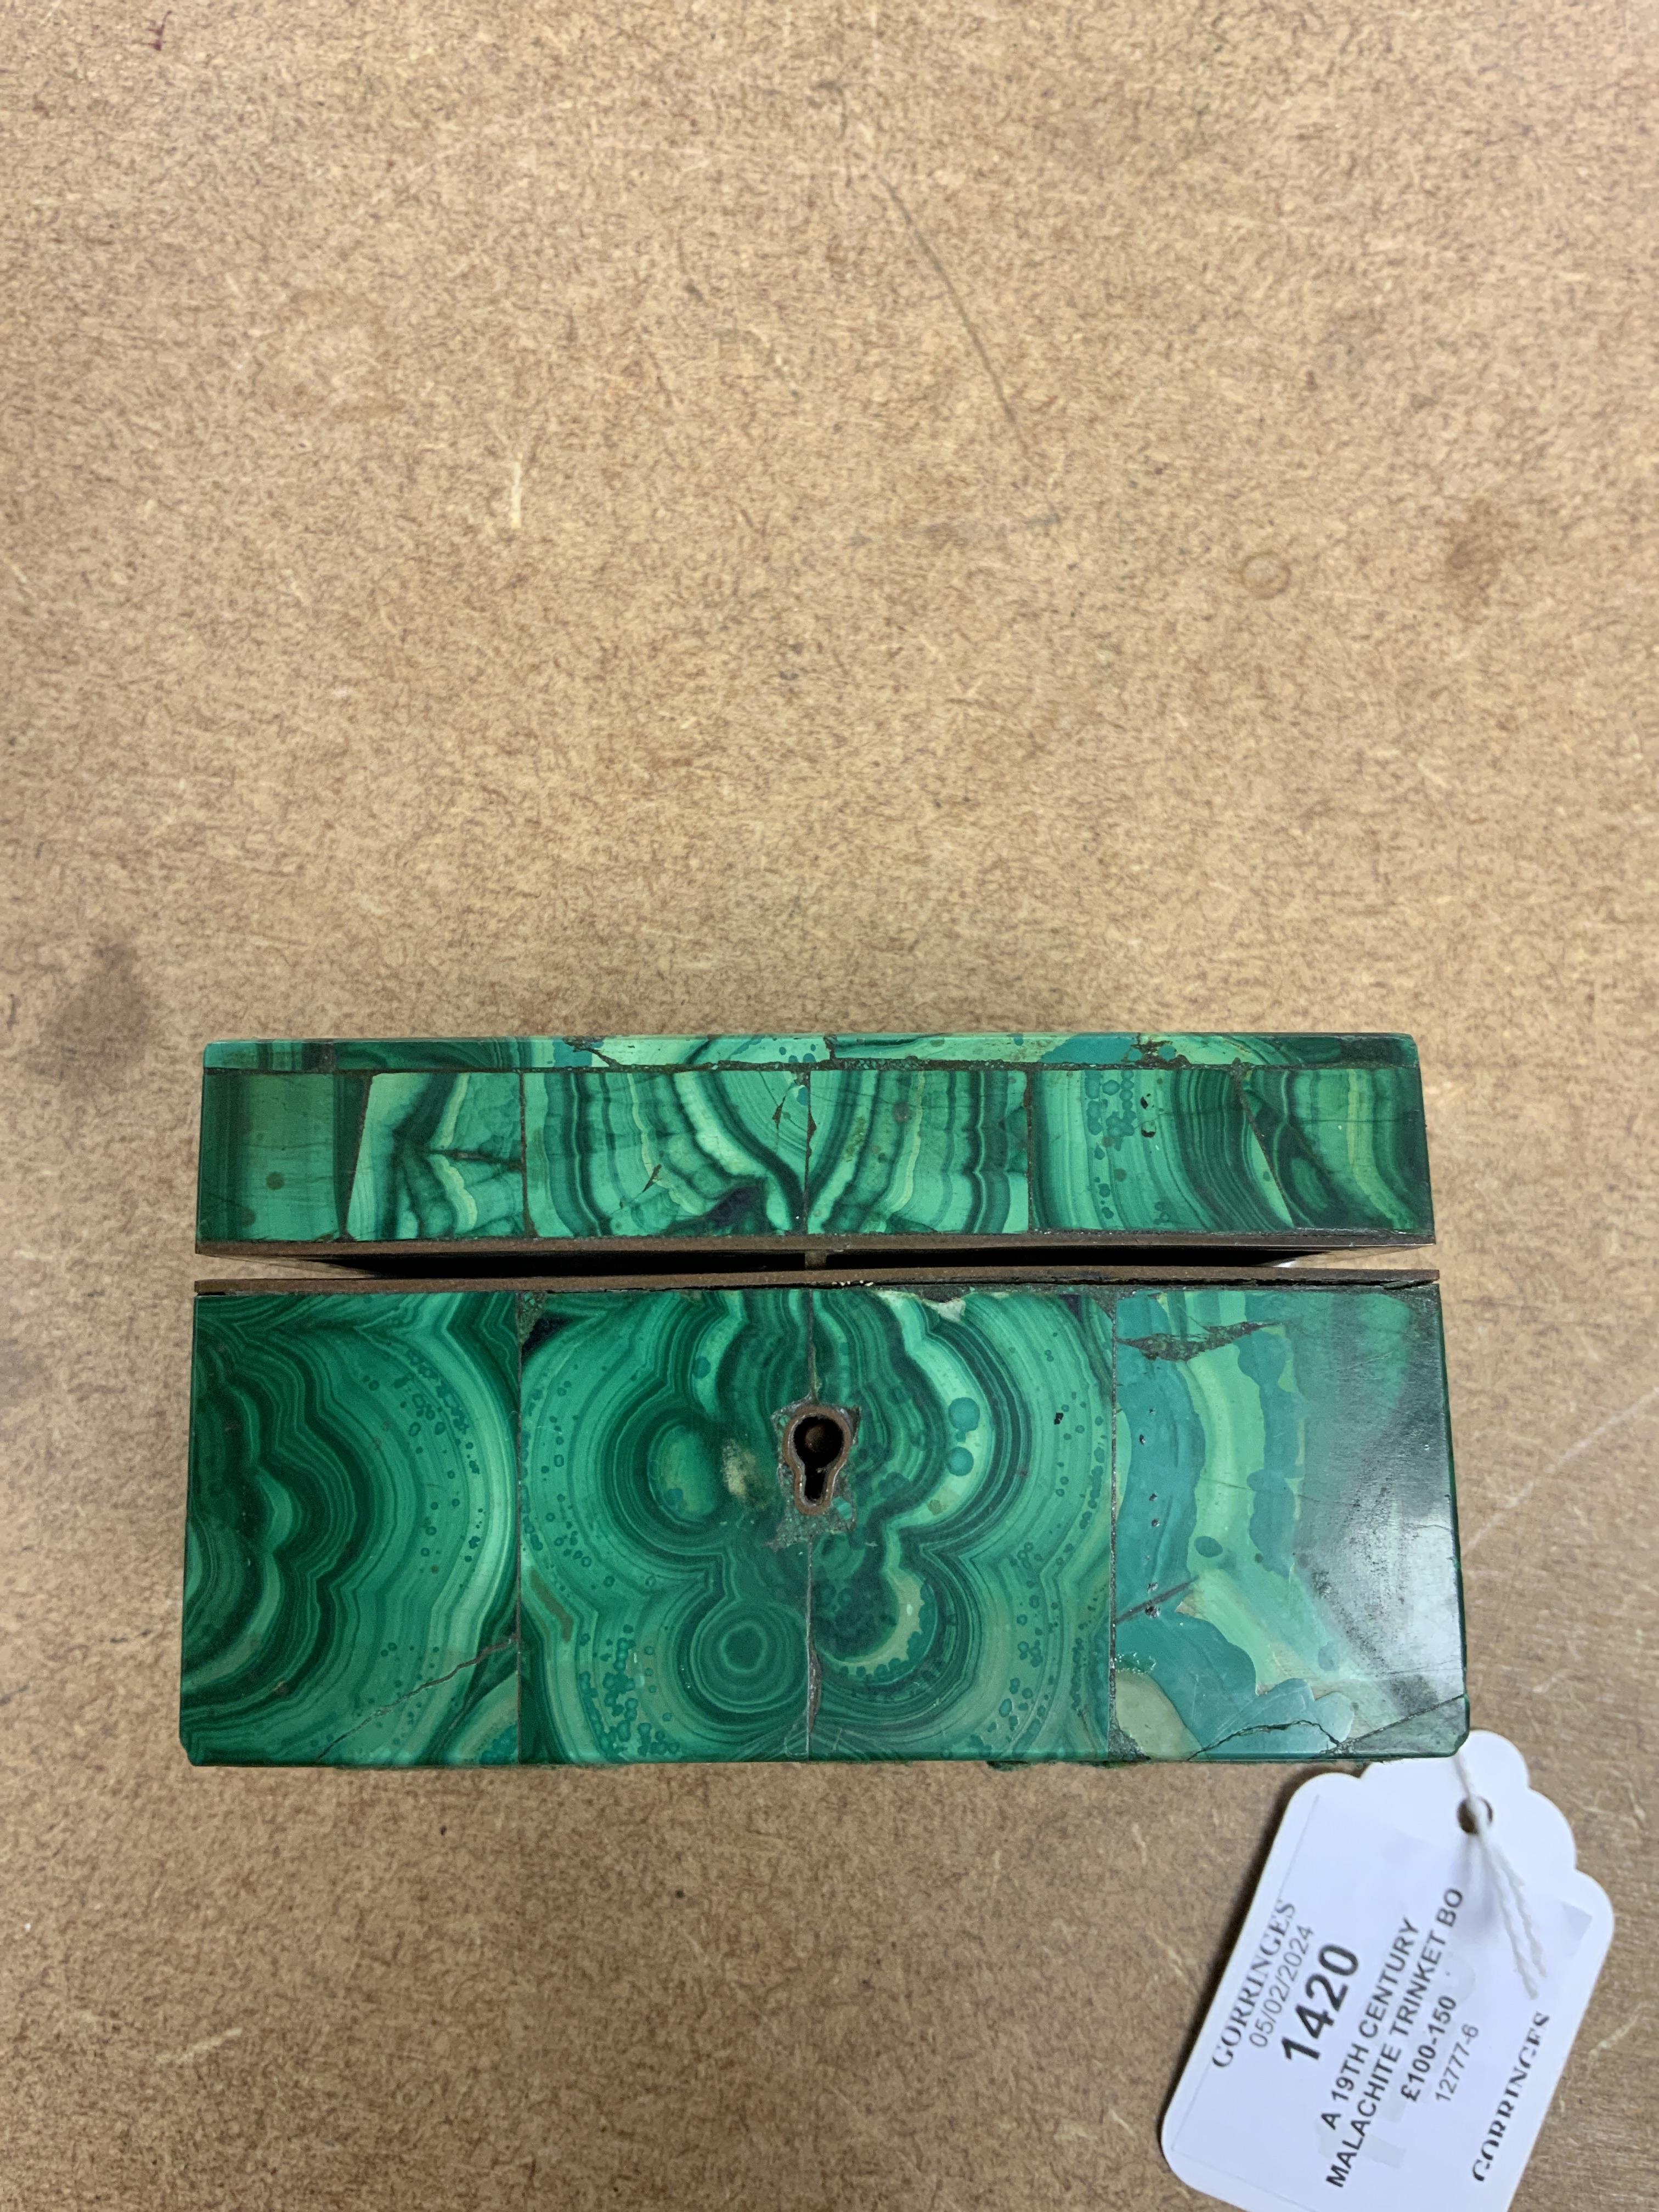 A 19th century malachite trinket box, 9.5cm wide, 5.5cm high, 6.4cm deep